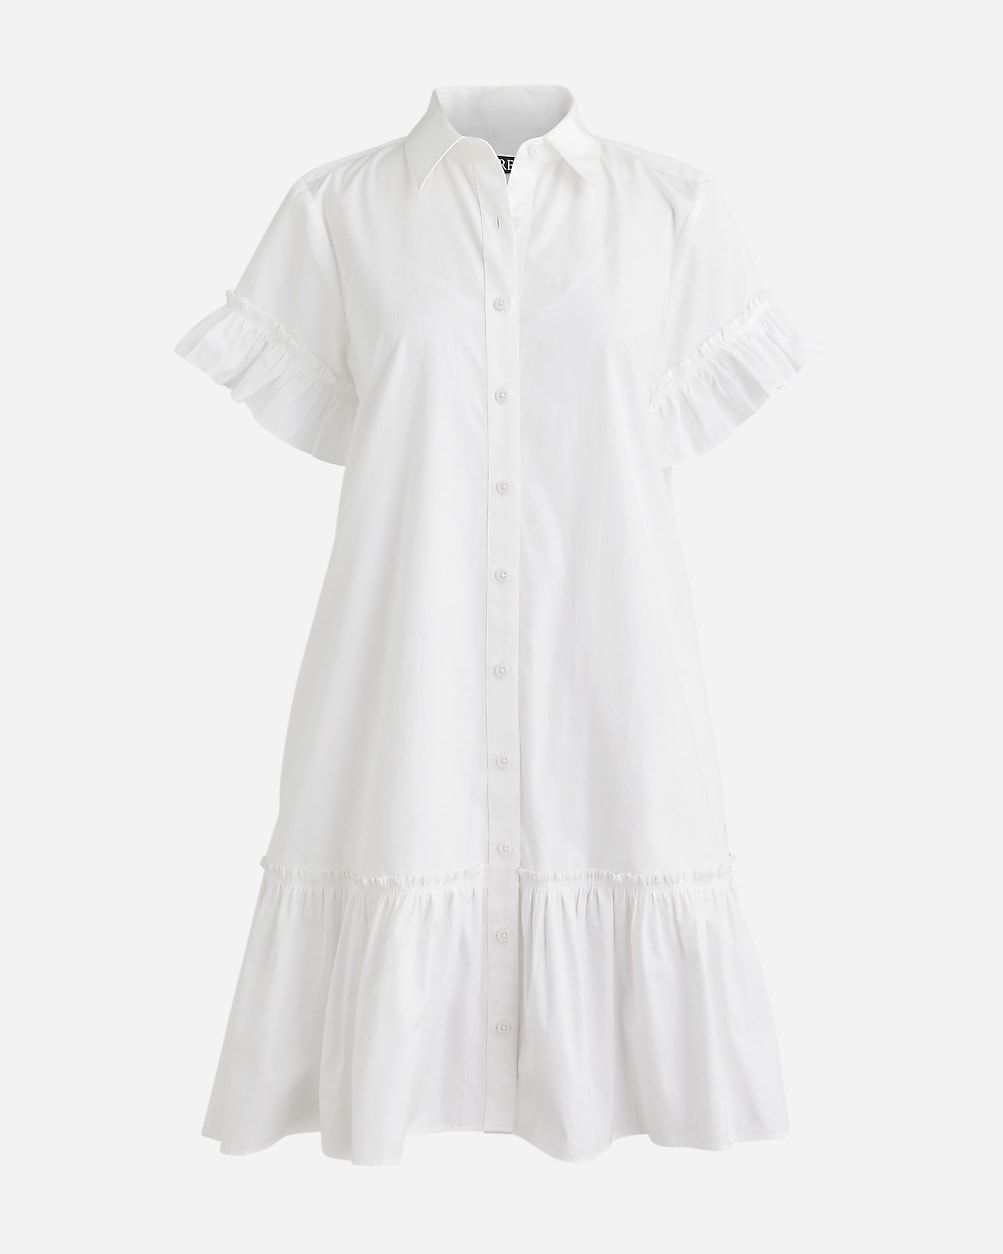 Shop this looknewAmelia shirtdress in cotton poplin$138.00-$198.00White$198.00$148.00$138.00Selec... | J.Crew US